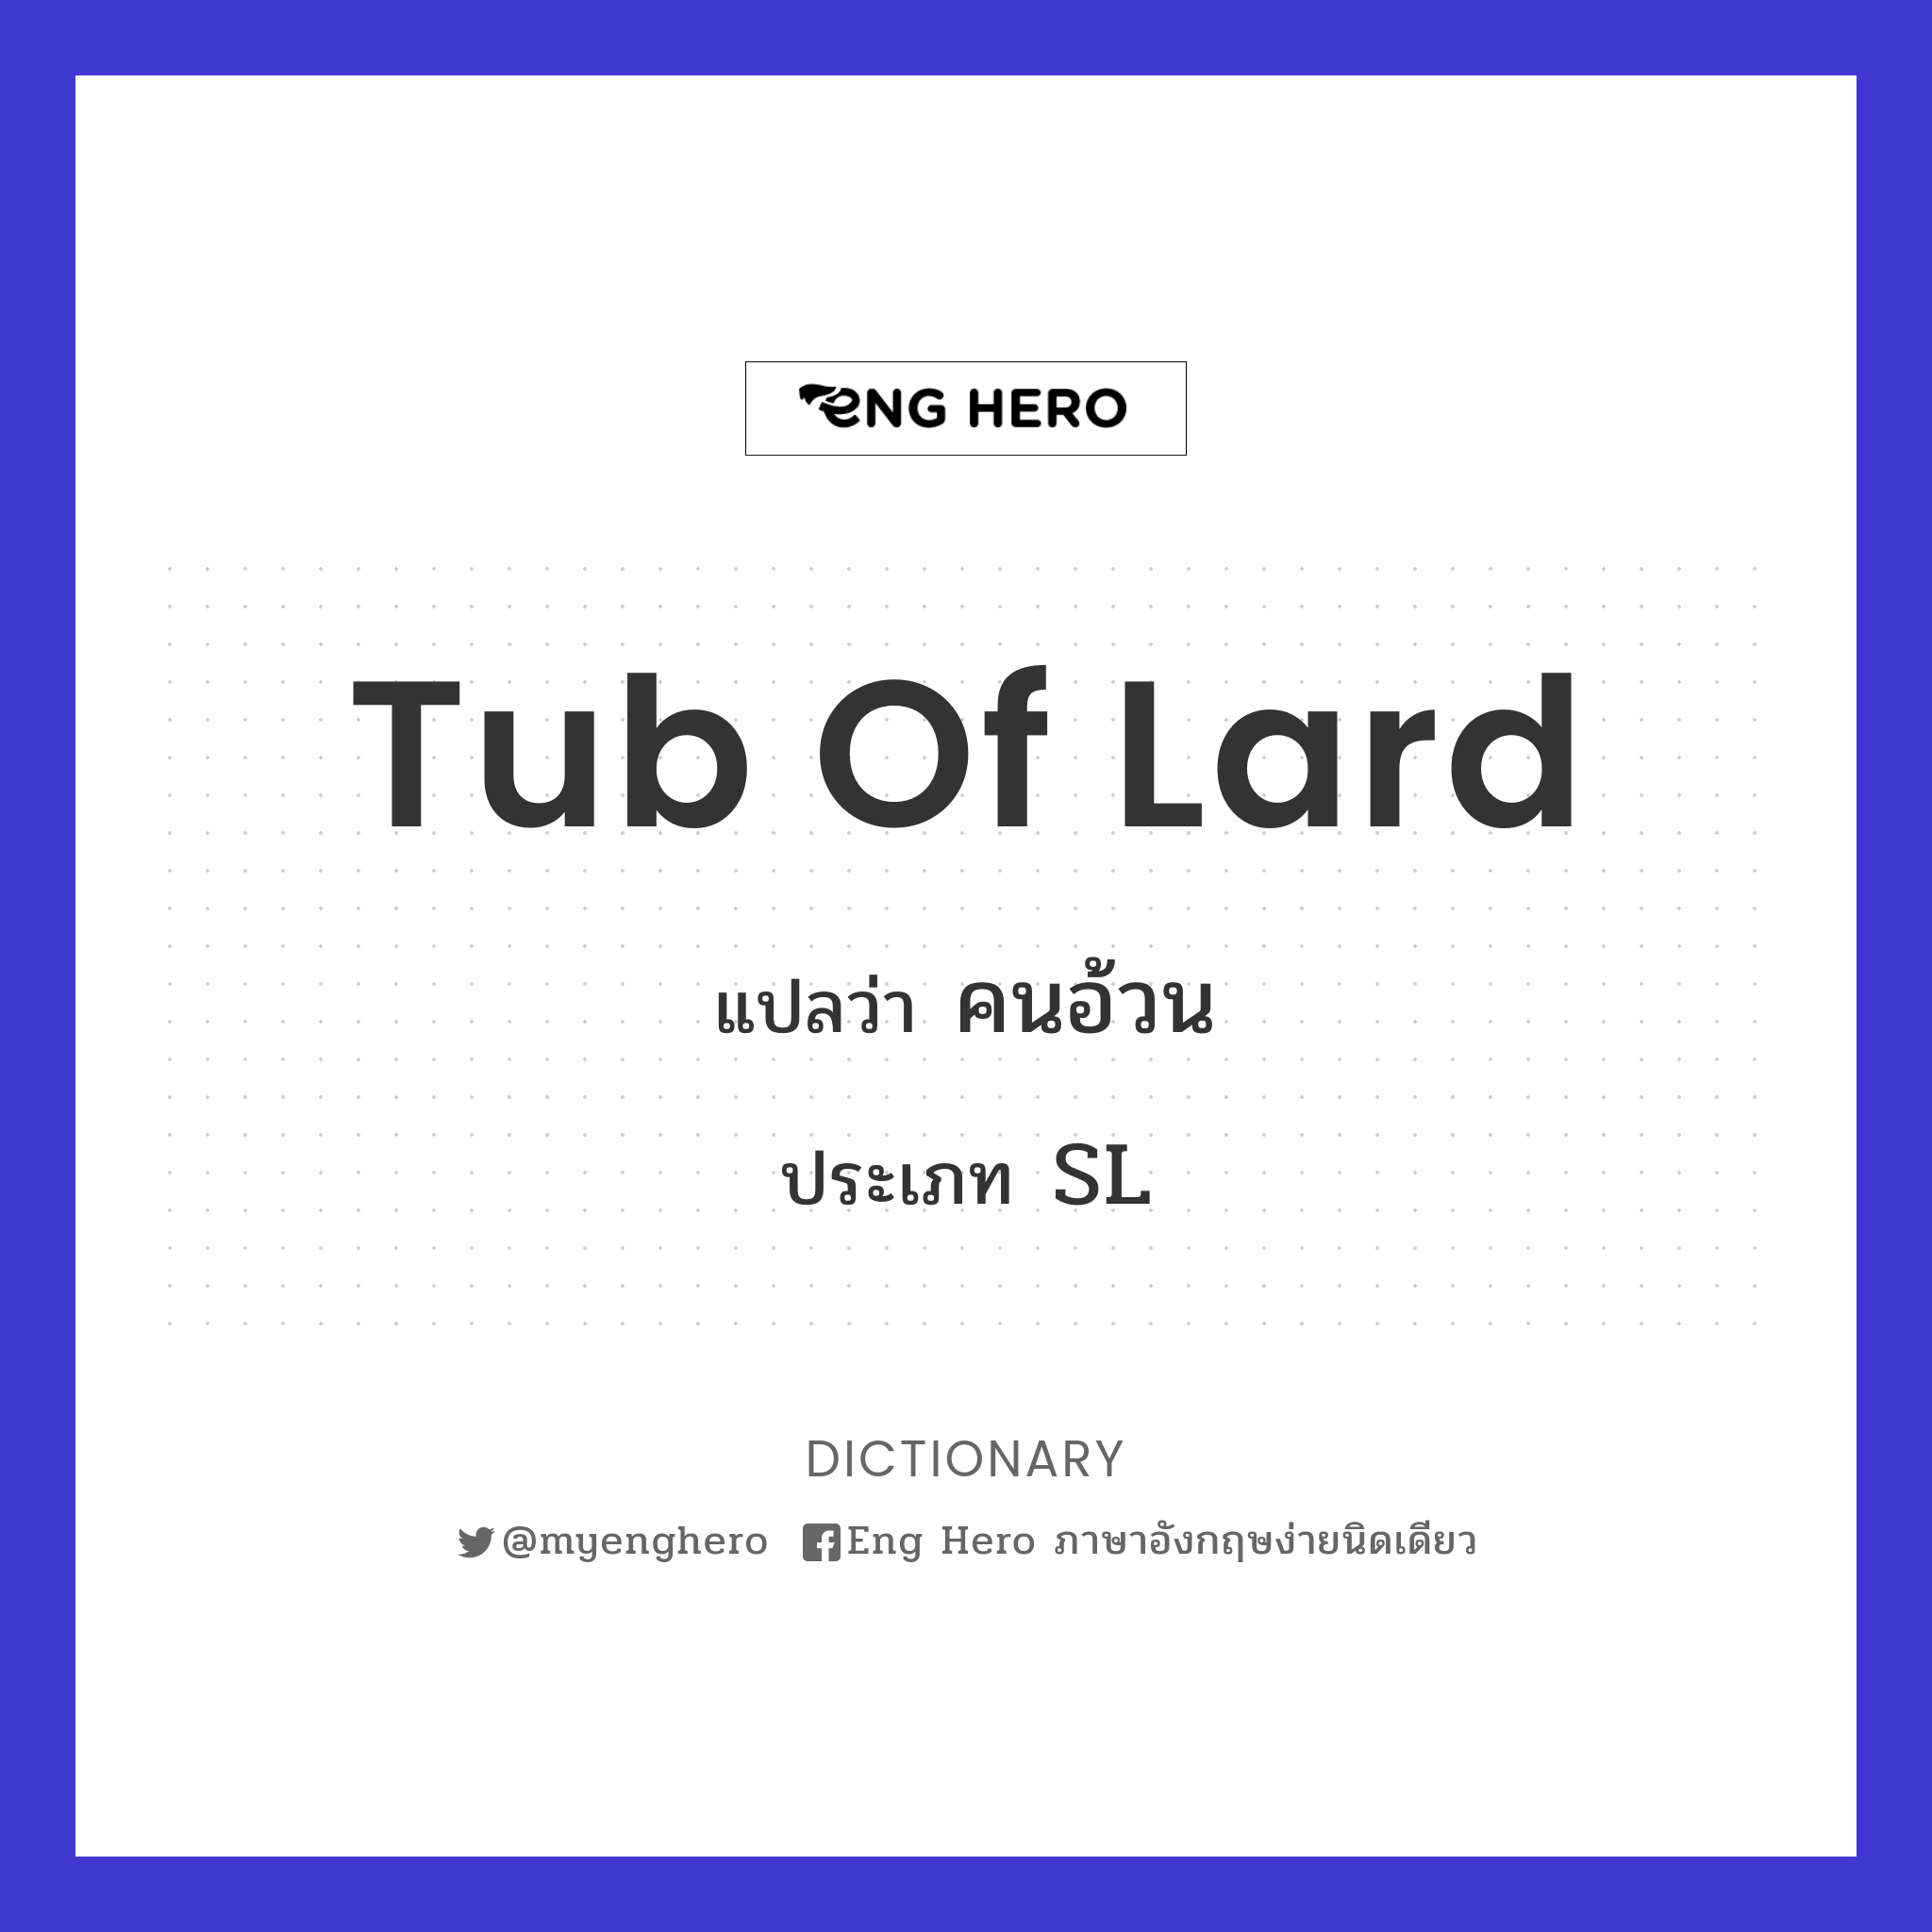 tub of lard